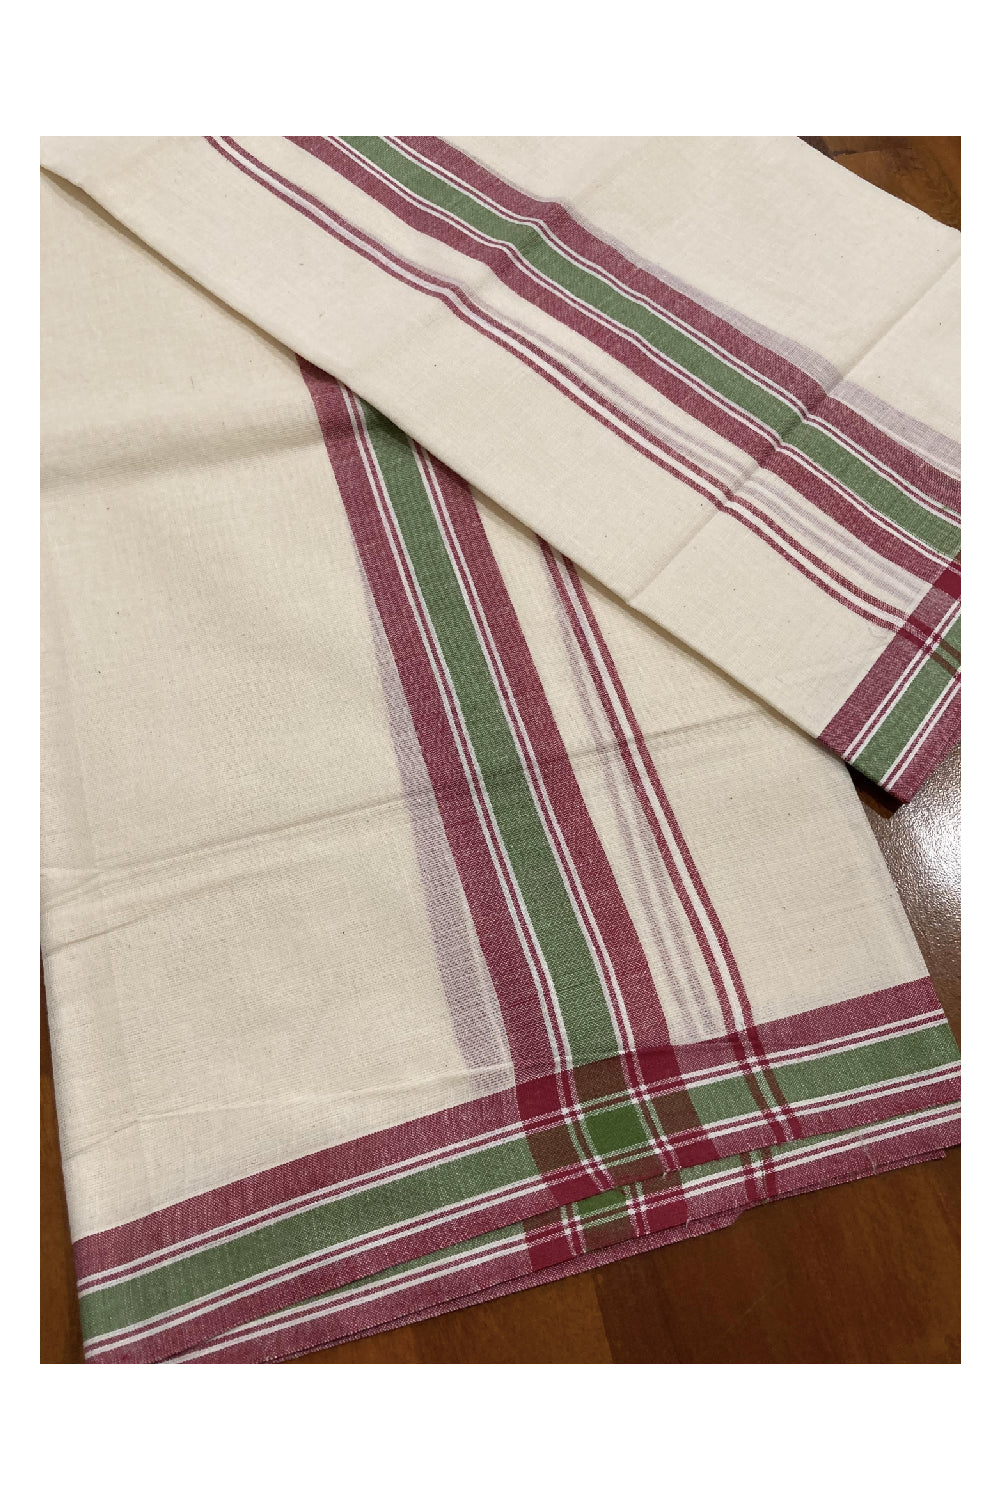 Kerala Cotton Mundum Neriyathum Single (Set Mundu) with Mulloth Design Dark Red and Green Border (Extra Soft Cotton)